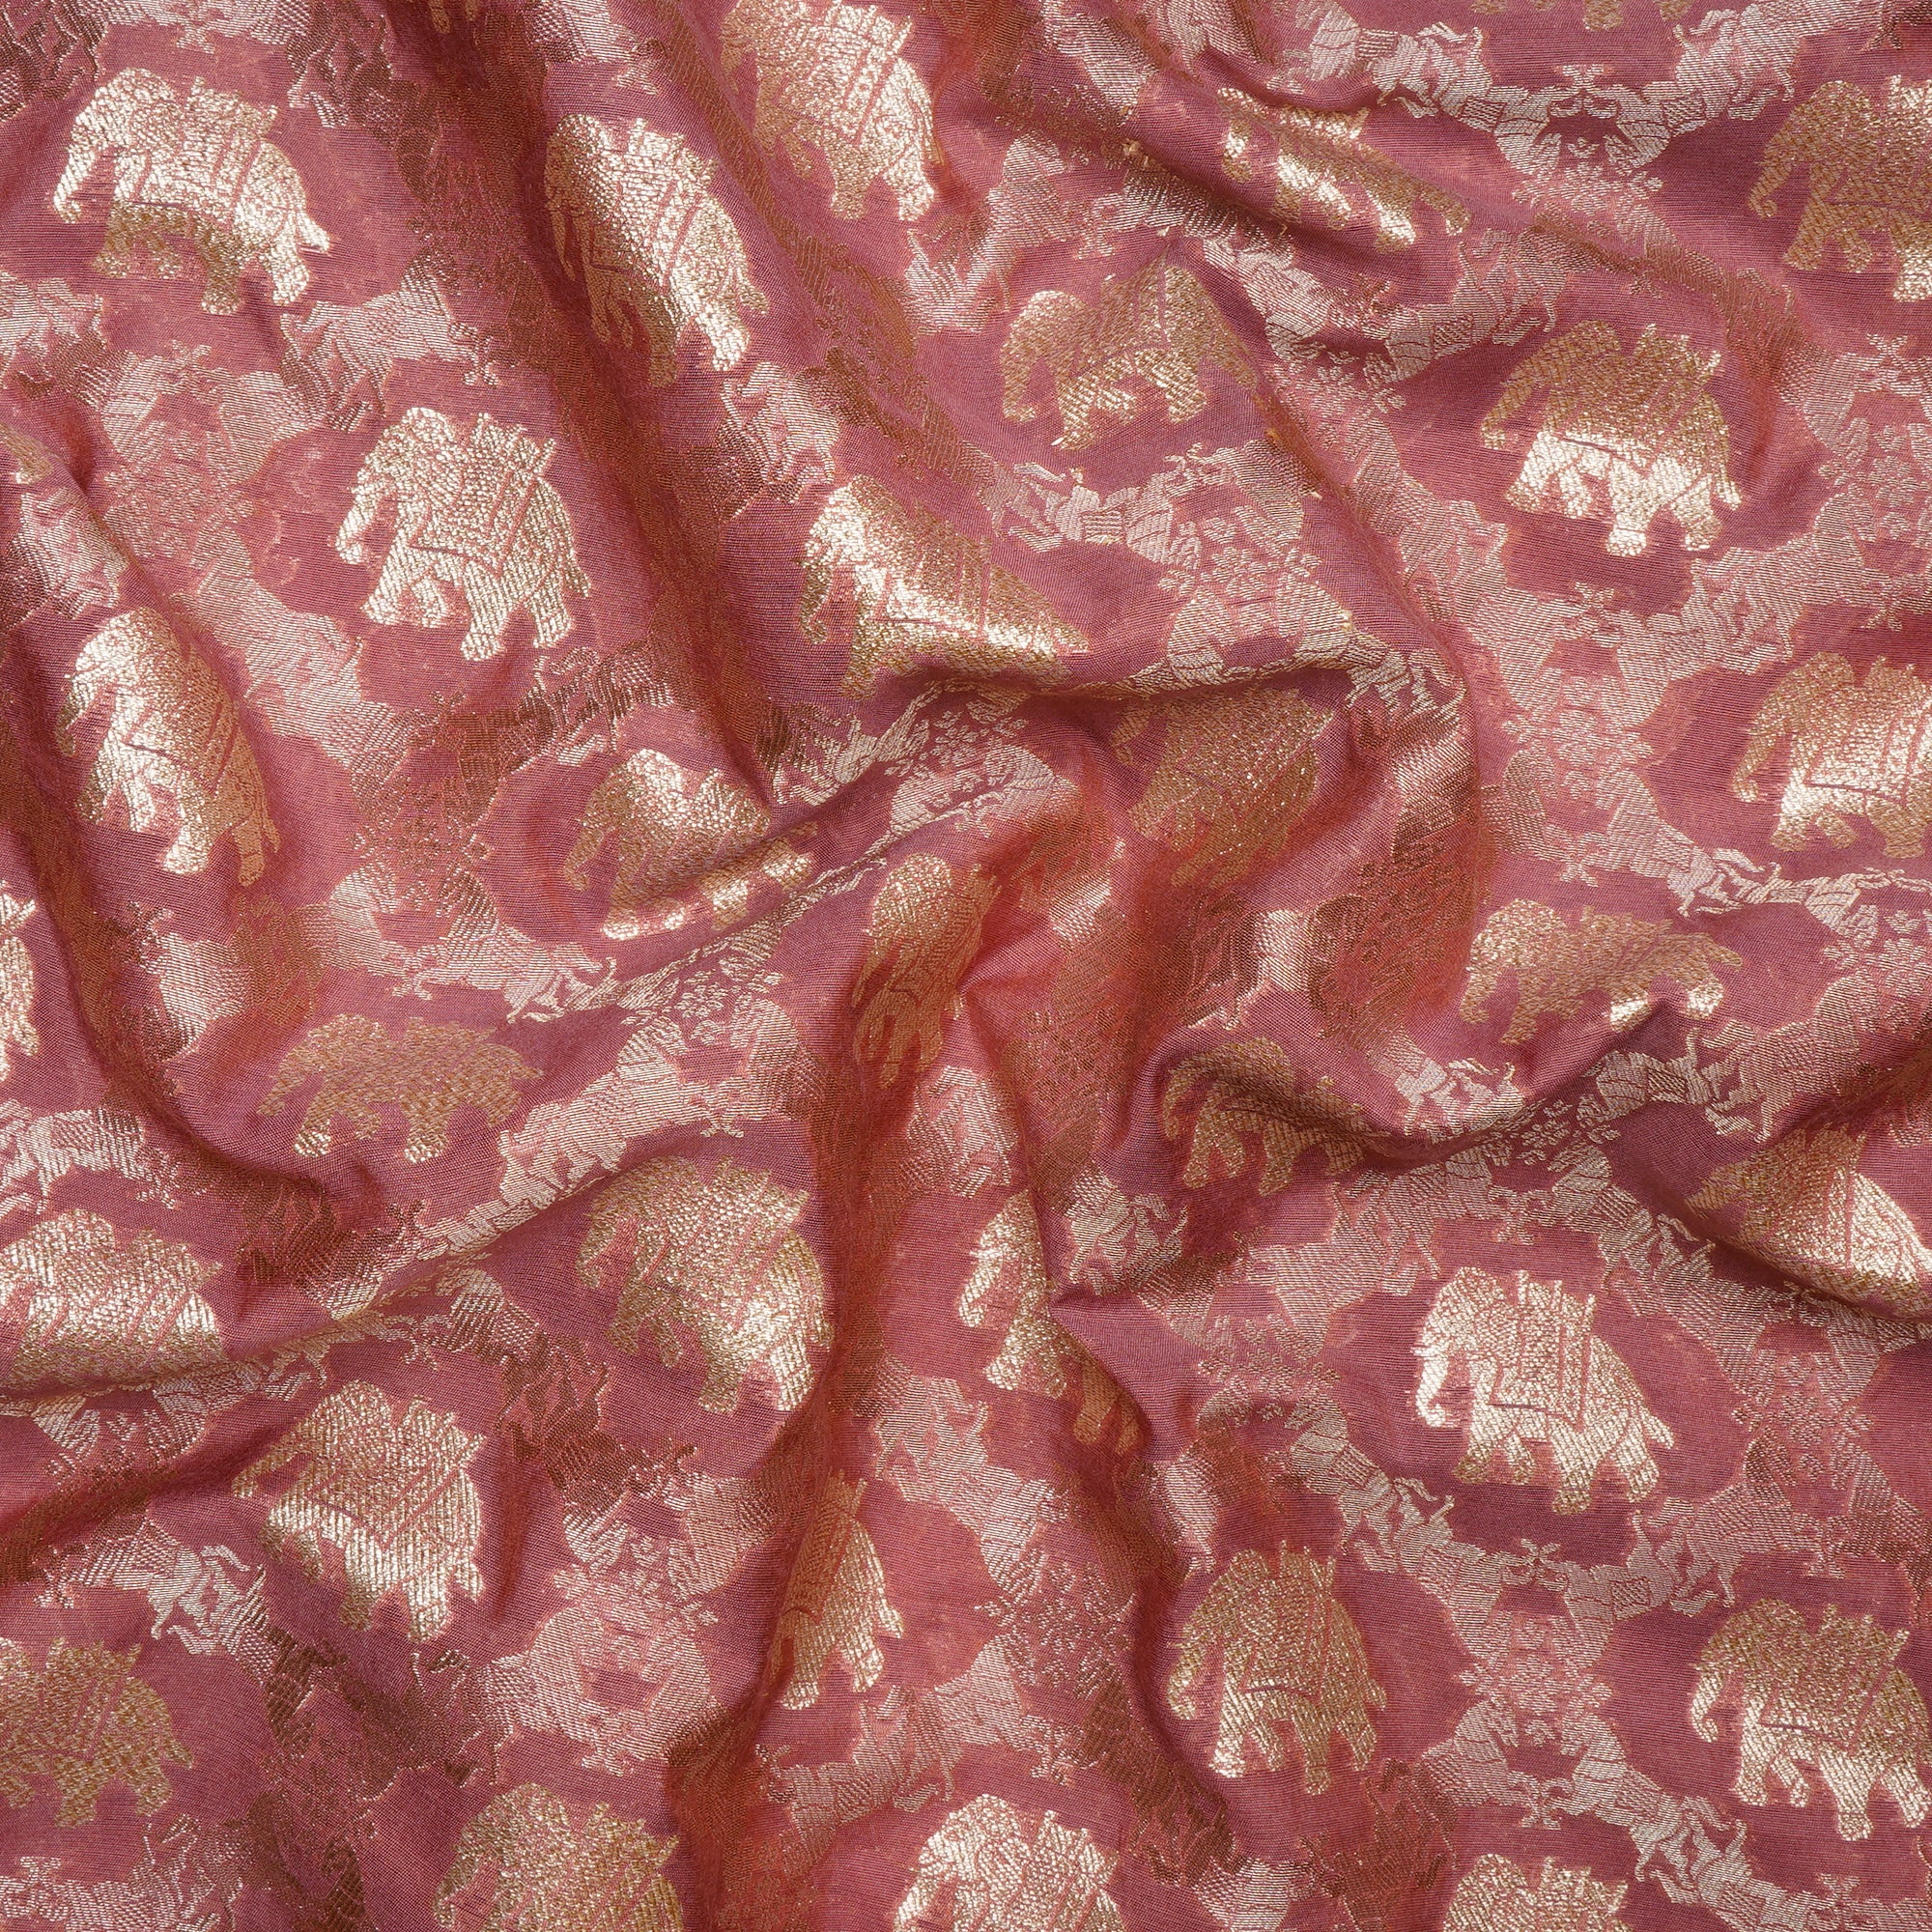 Mauveglow Traditional Pattern Blended Banarasi Brocade Fabric